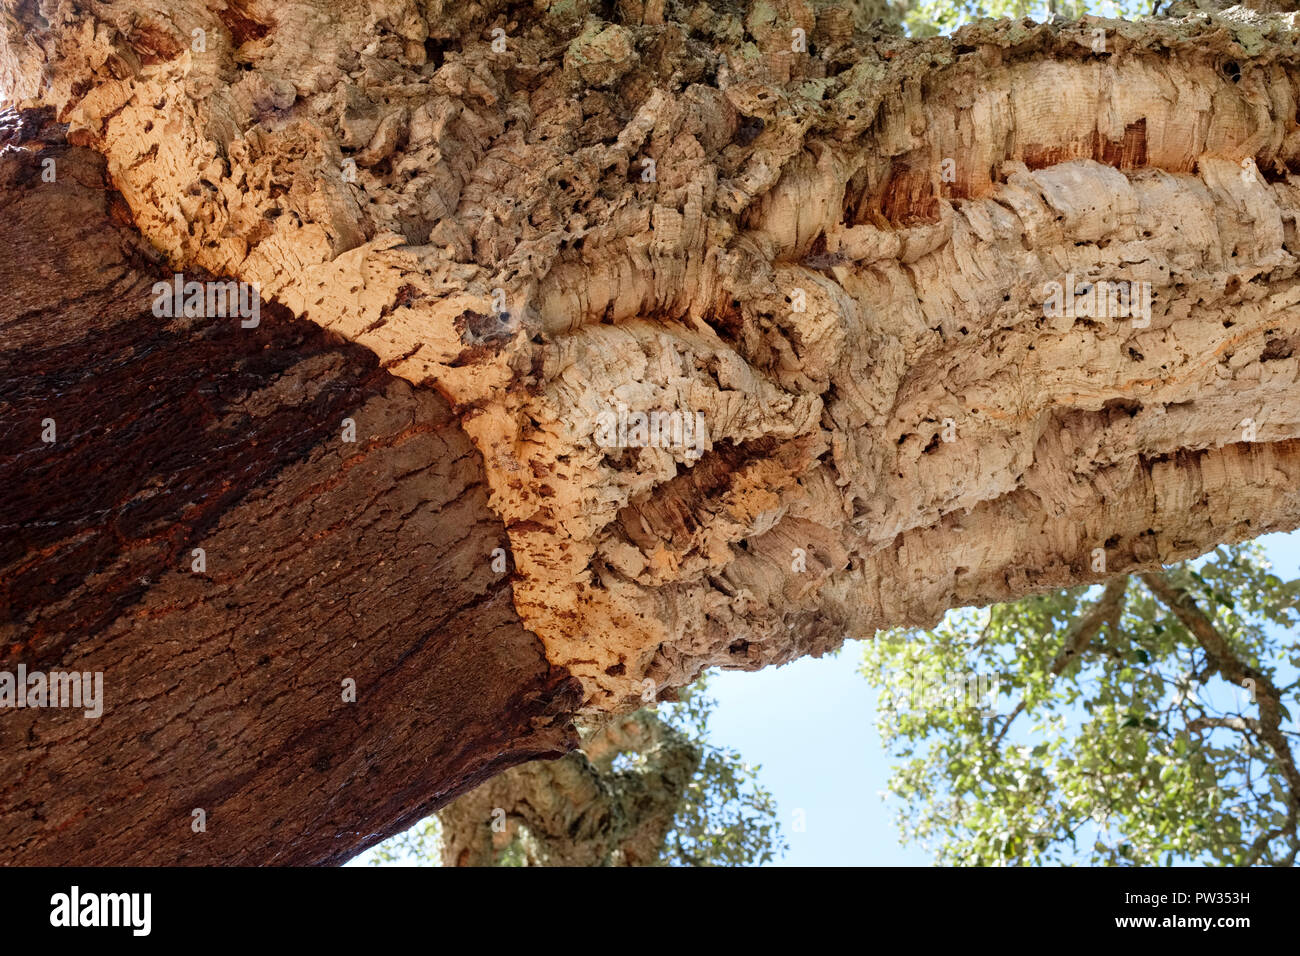 Cosechado cerca del alcornoque (Quercus suber). Cerca de Bosa, Cerdeña, Italia Foto de stock